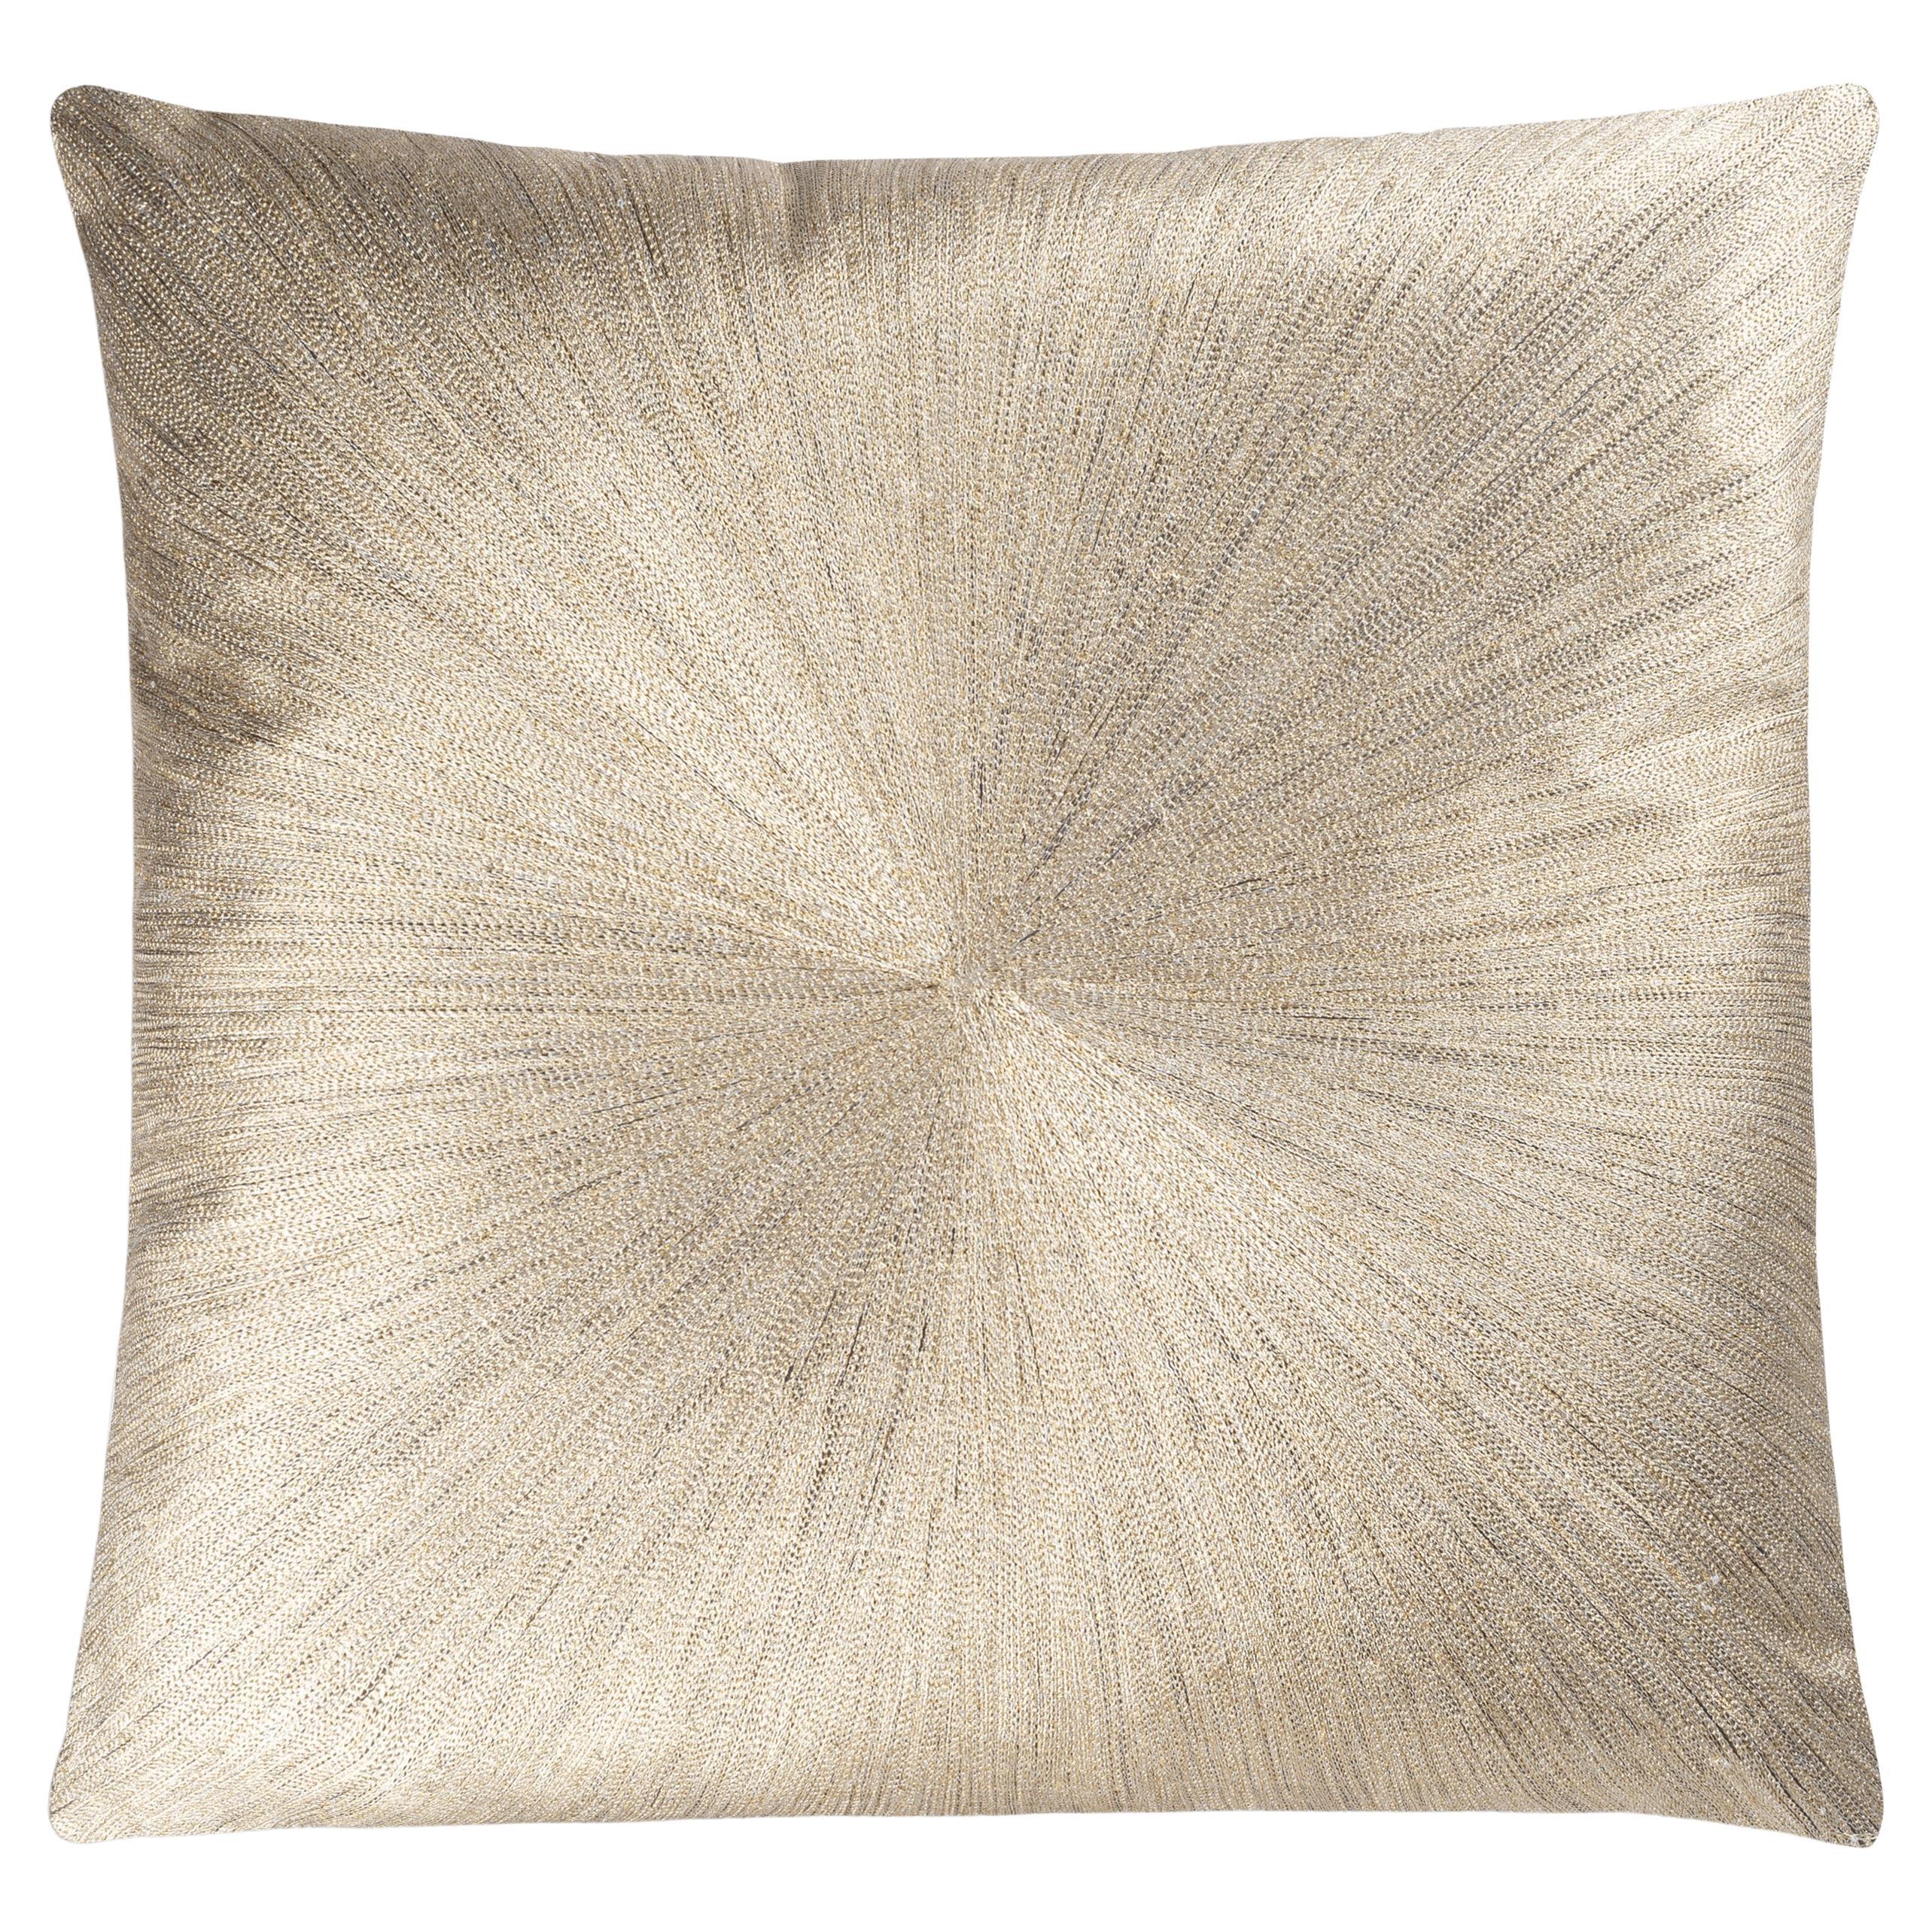 Nim Pillow, Charcoal Gold Linen For Sale